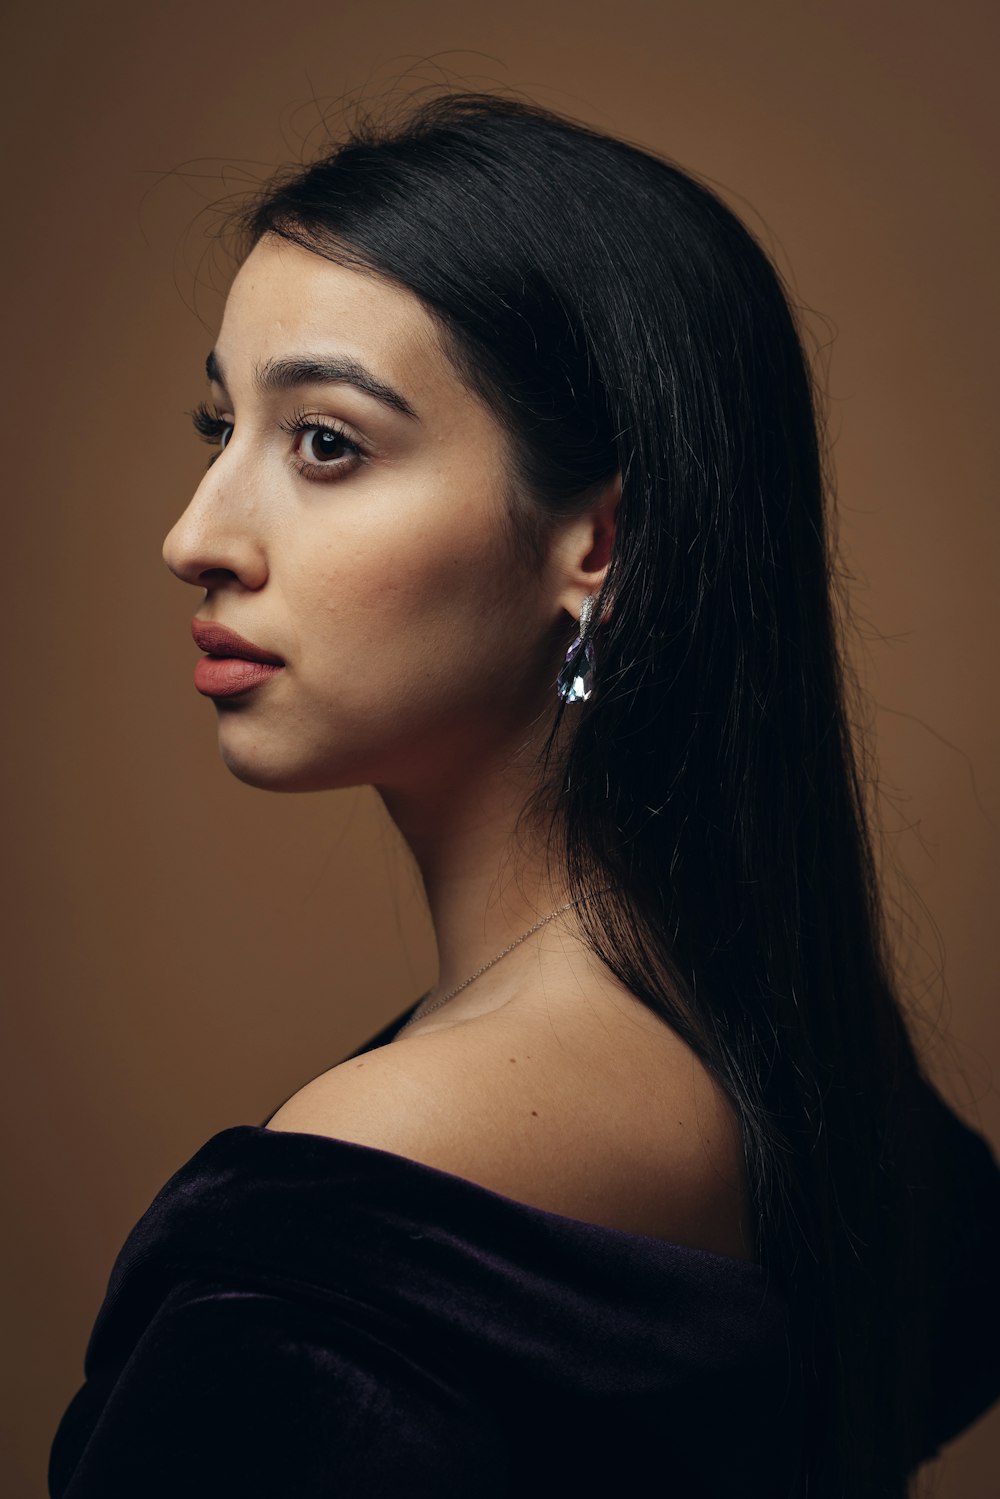 a woman with long black hair wearing earrings